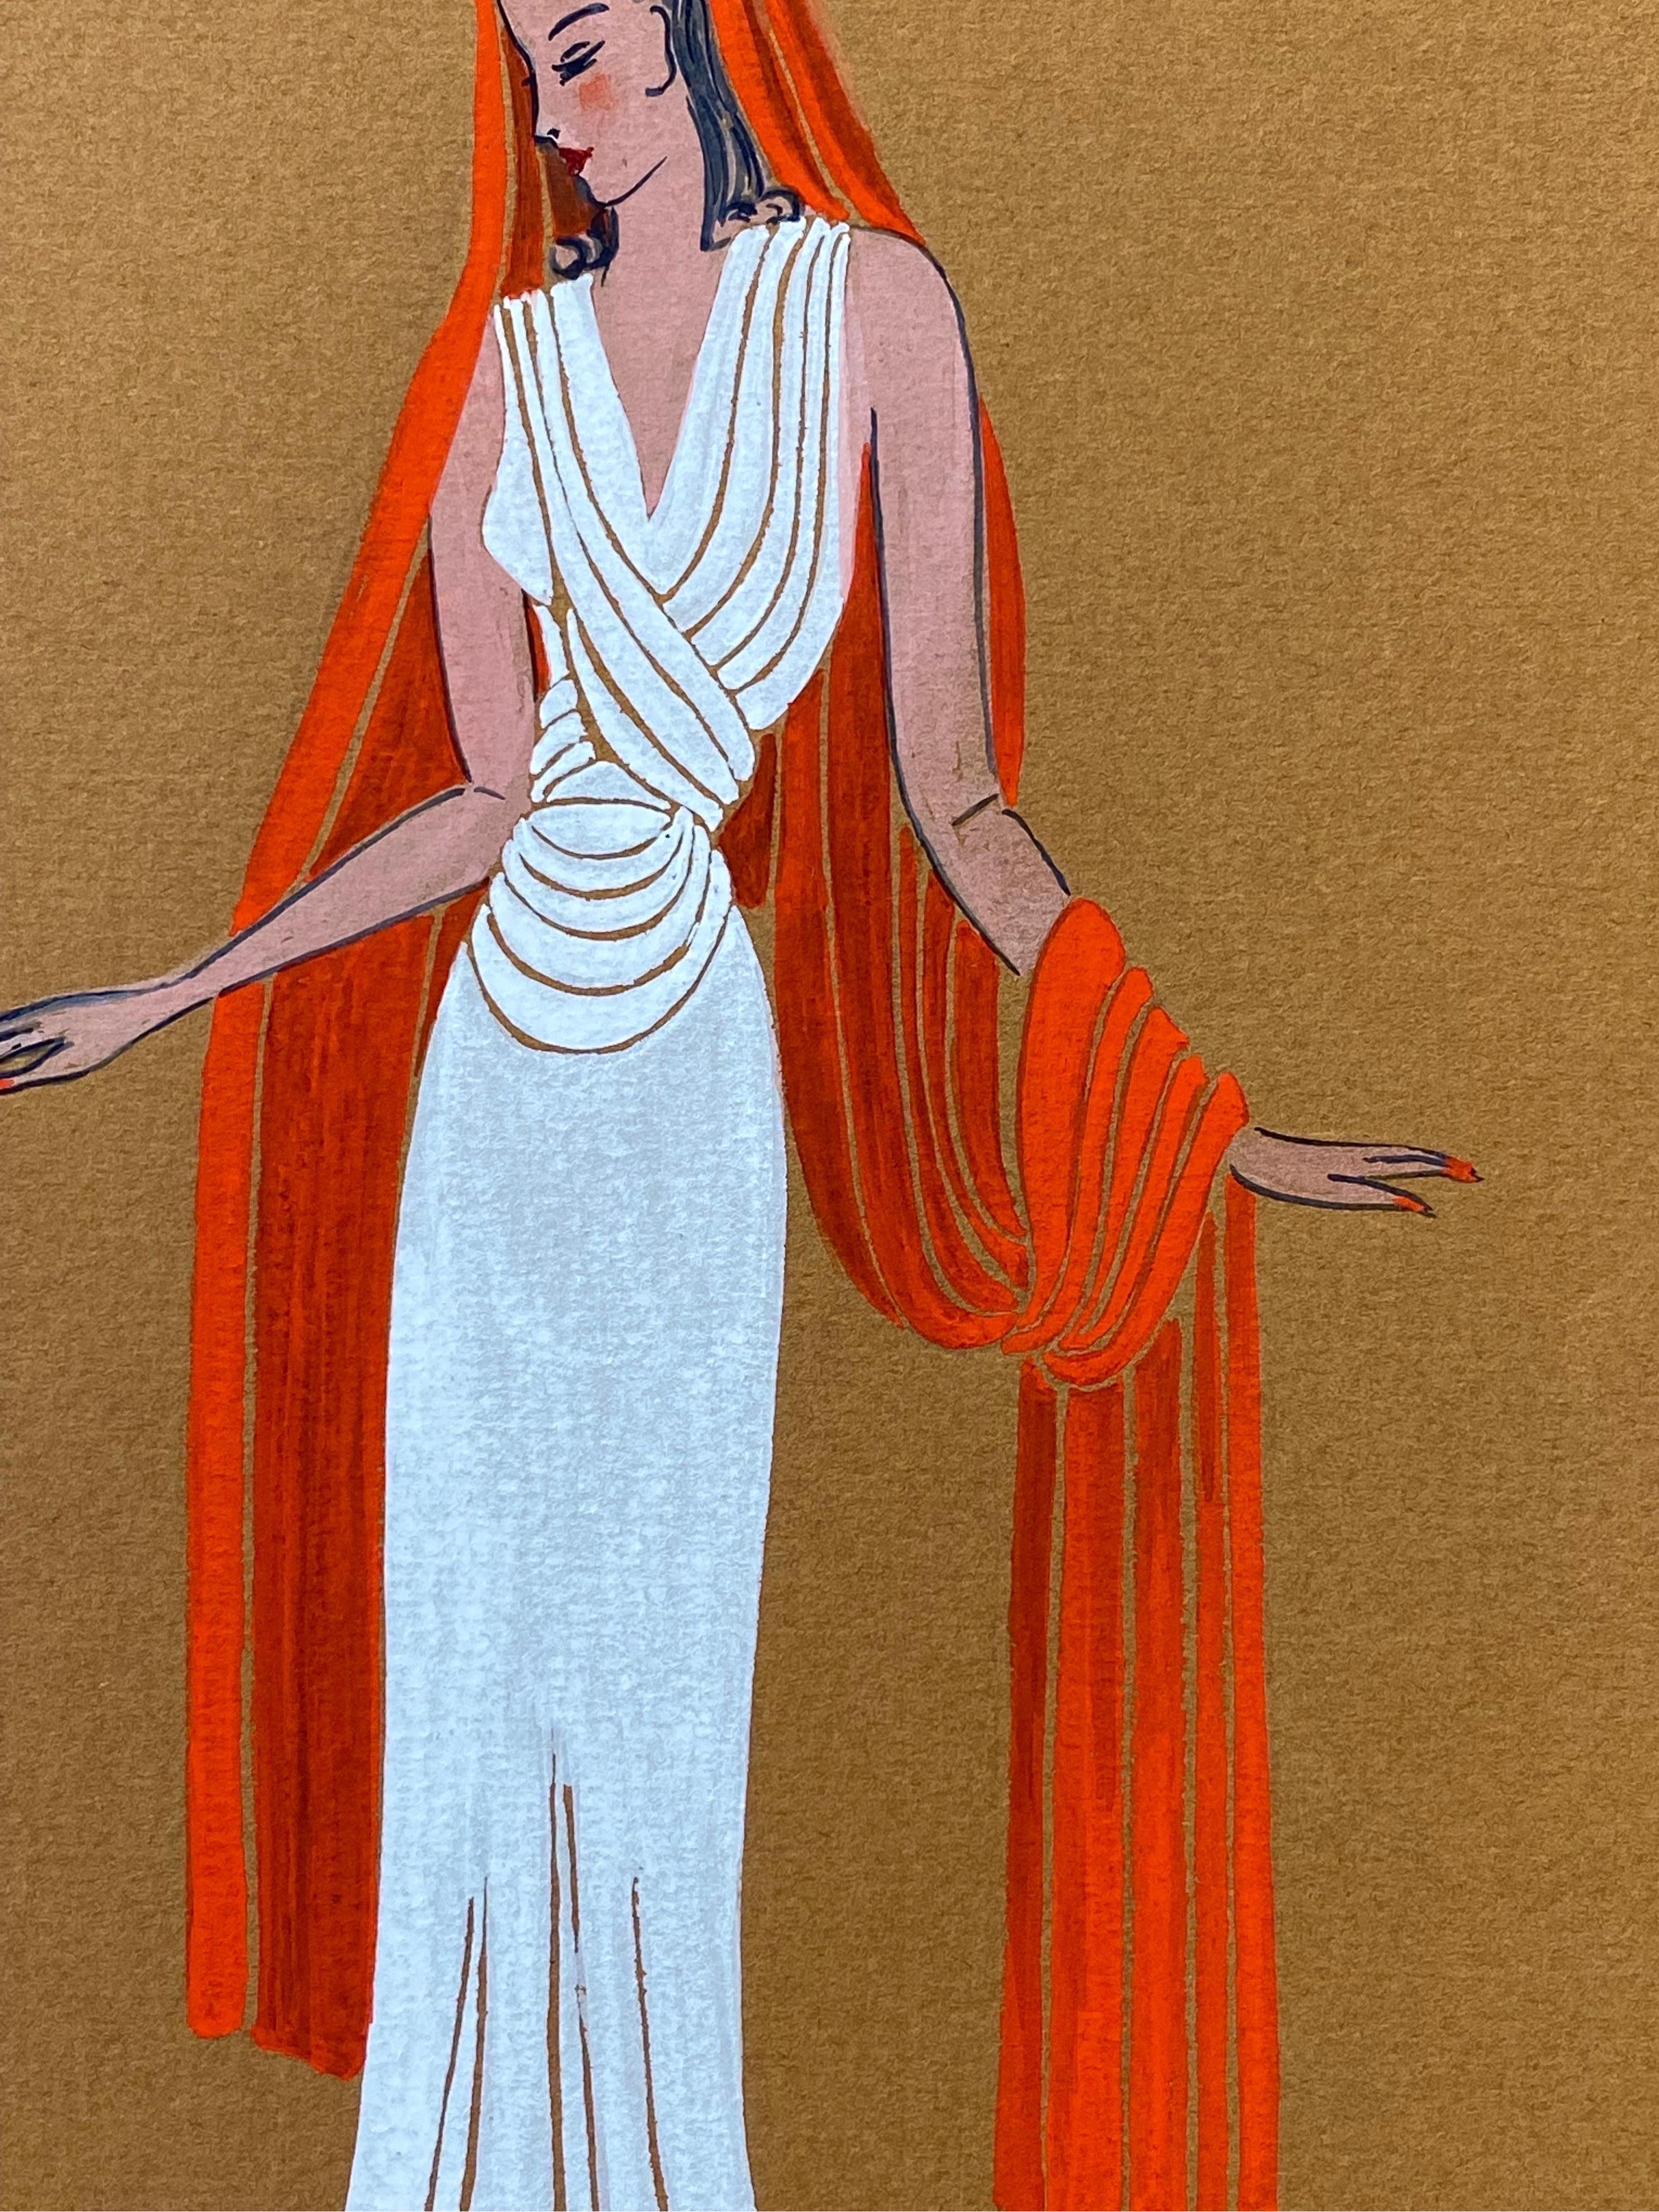 1940's Fashion Illustration - Lady In White Dress With Draped Orange Head Scarf - Art by Geneviève Thomas